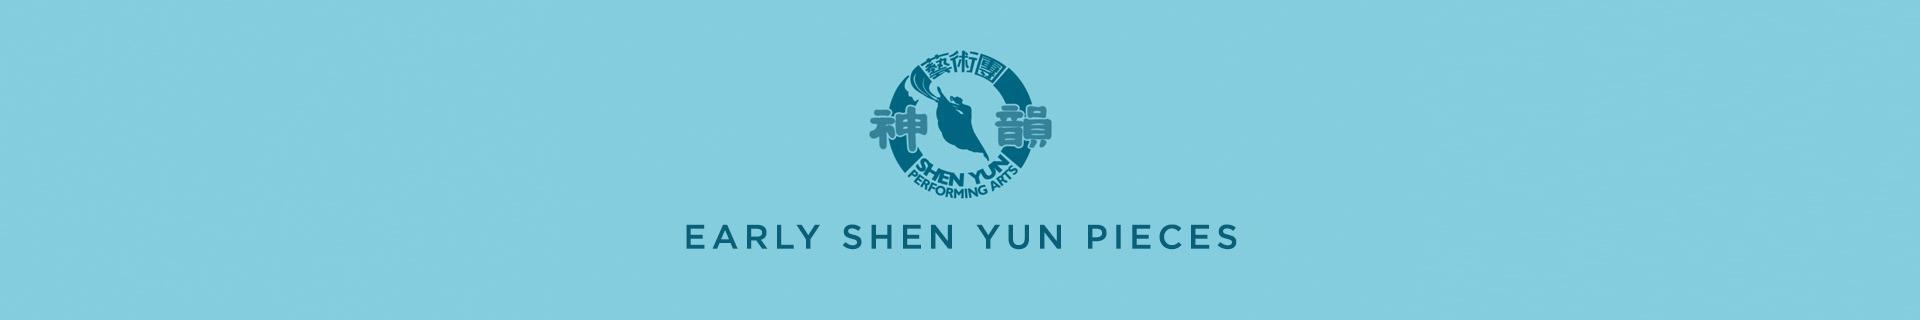 Early Shen Yun Pieces